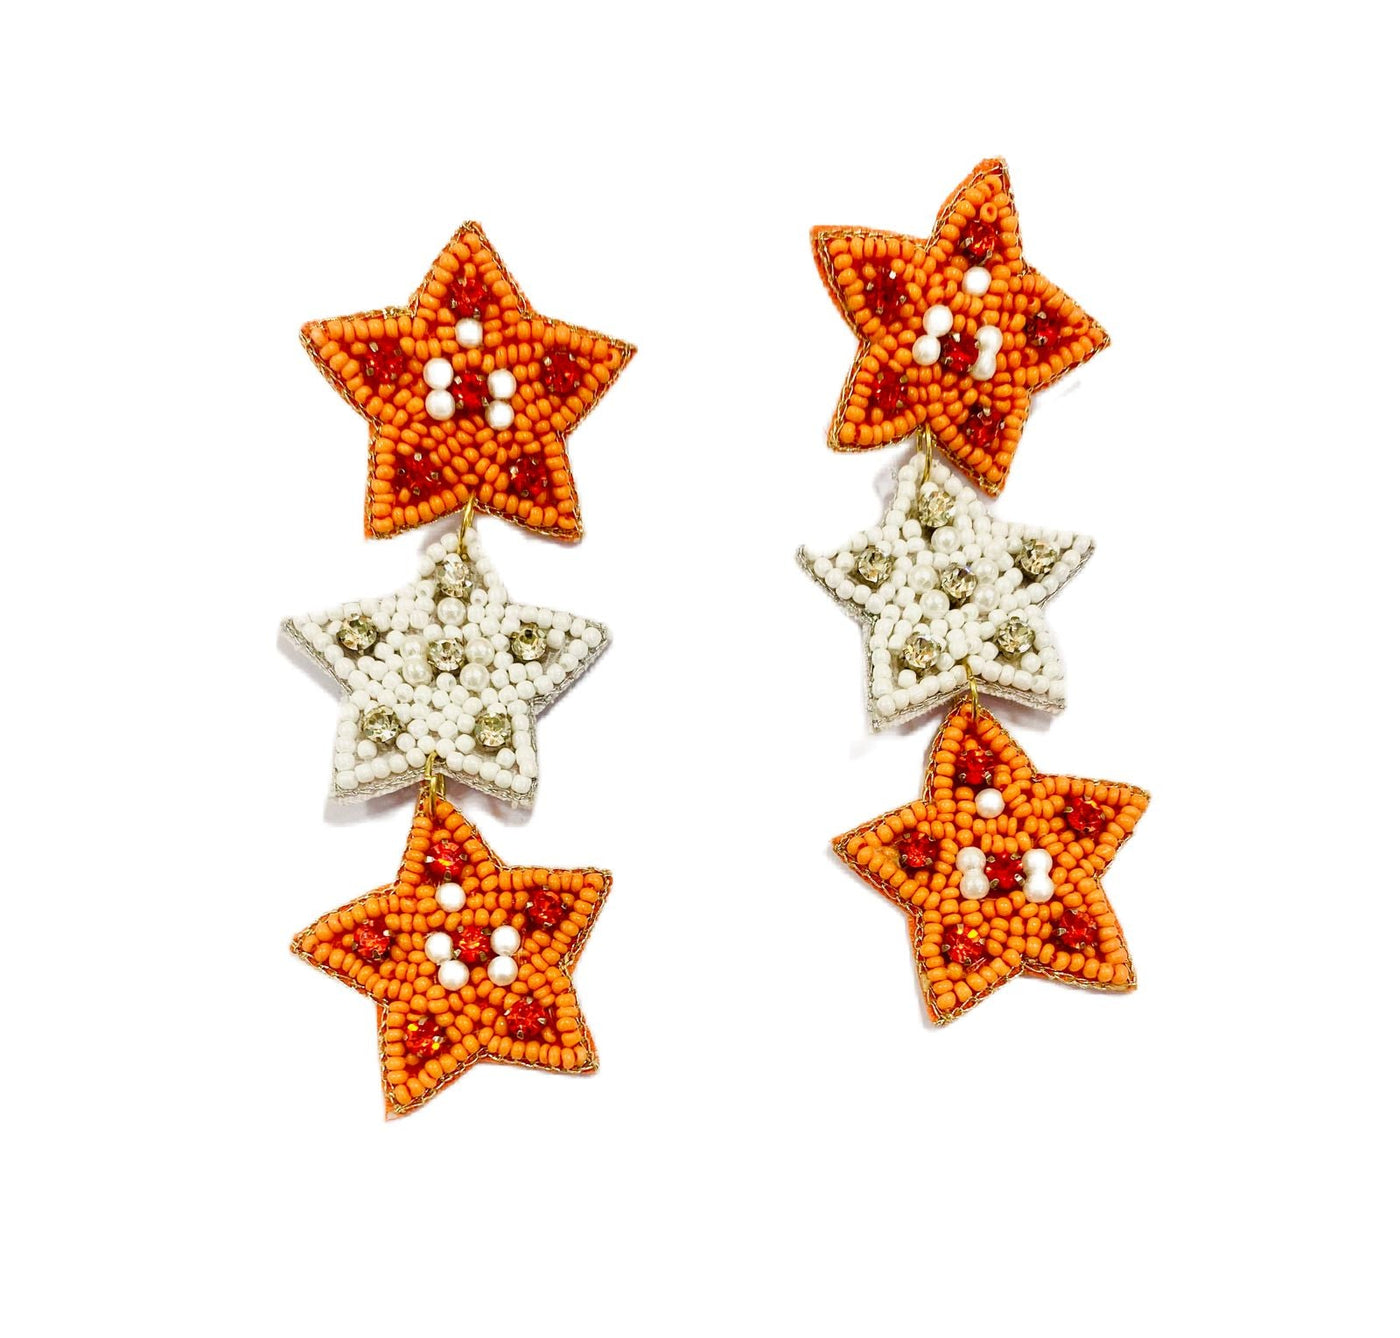 Triple Star Earrings - Orange and White